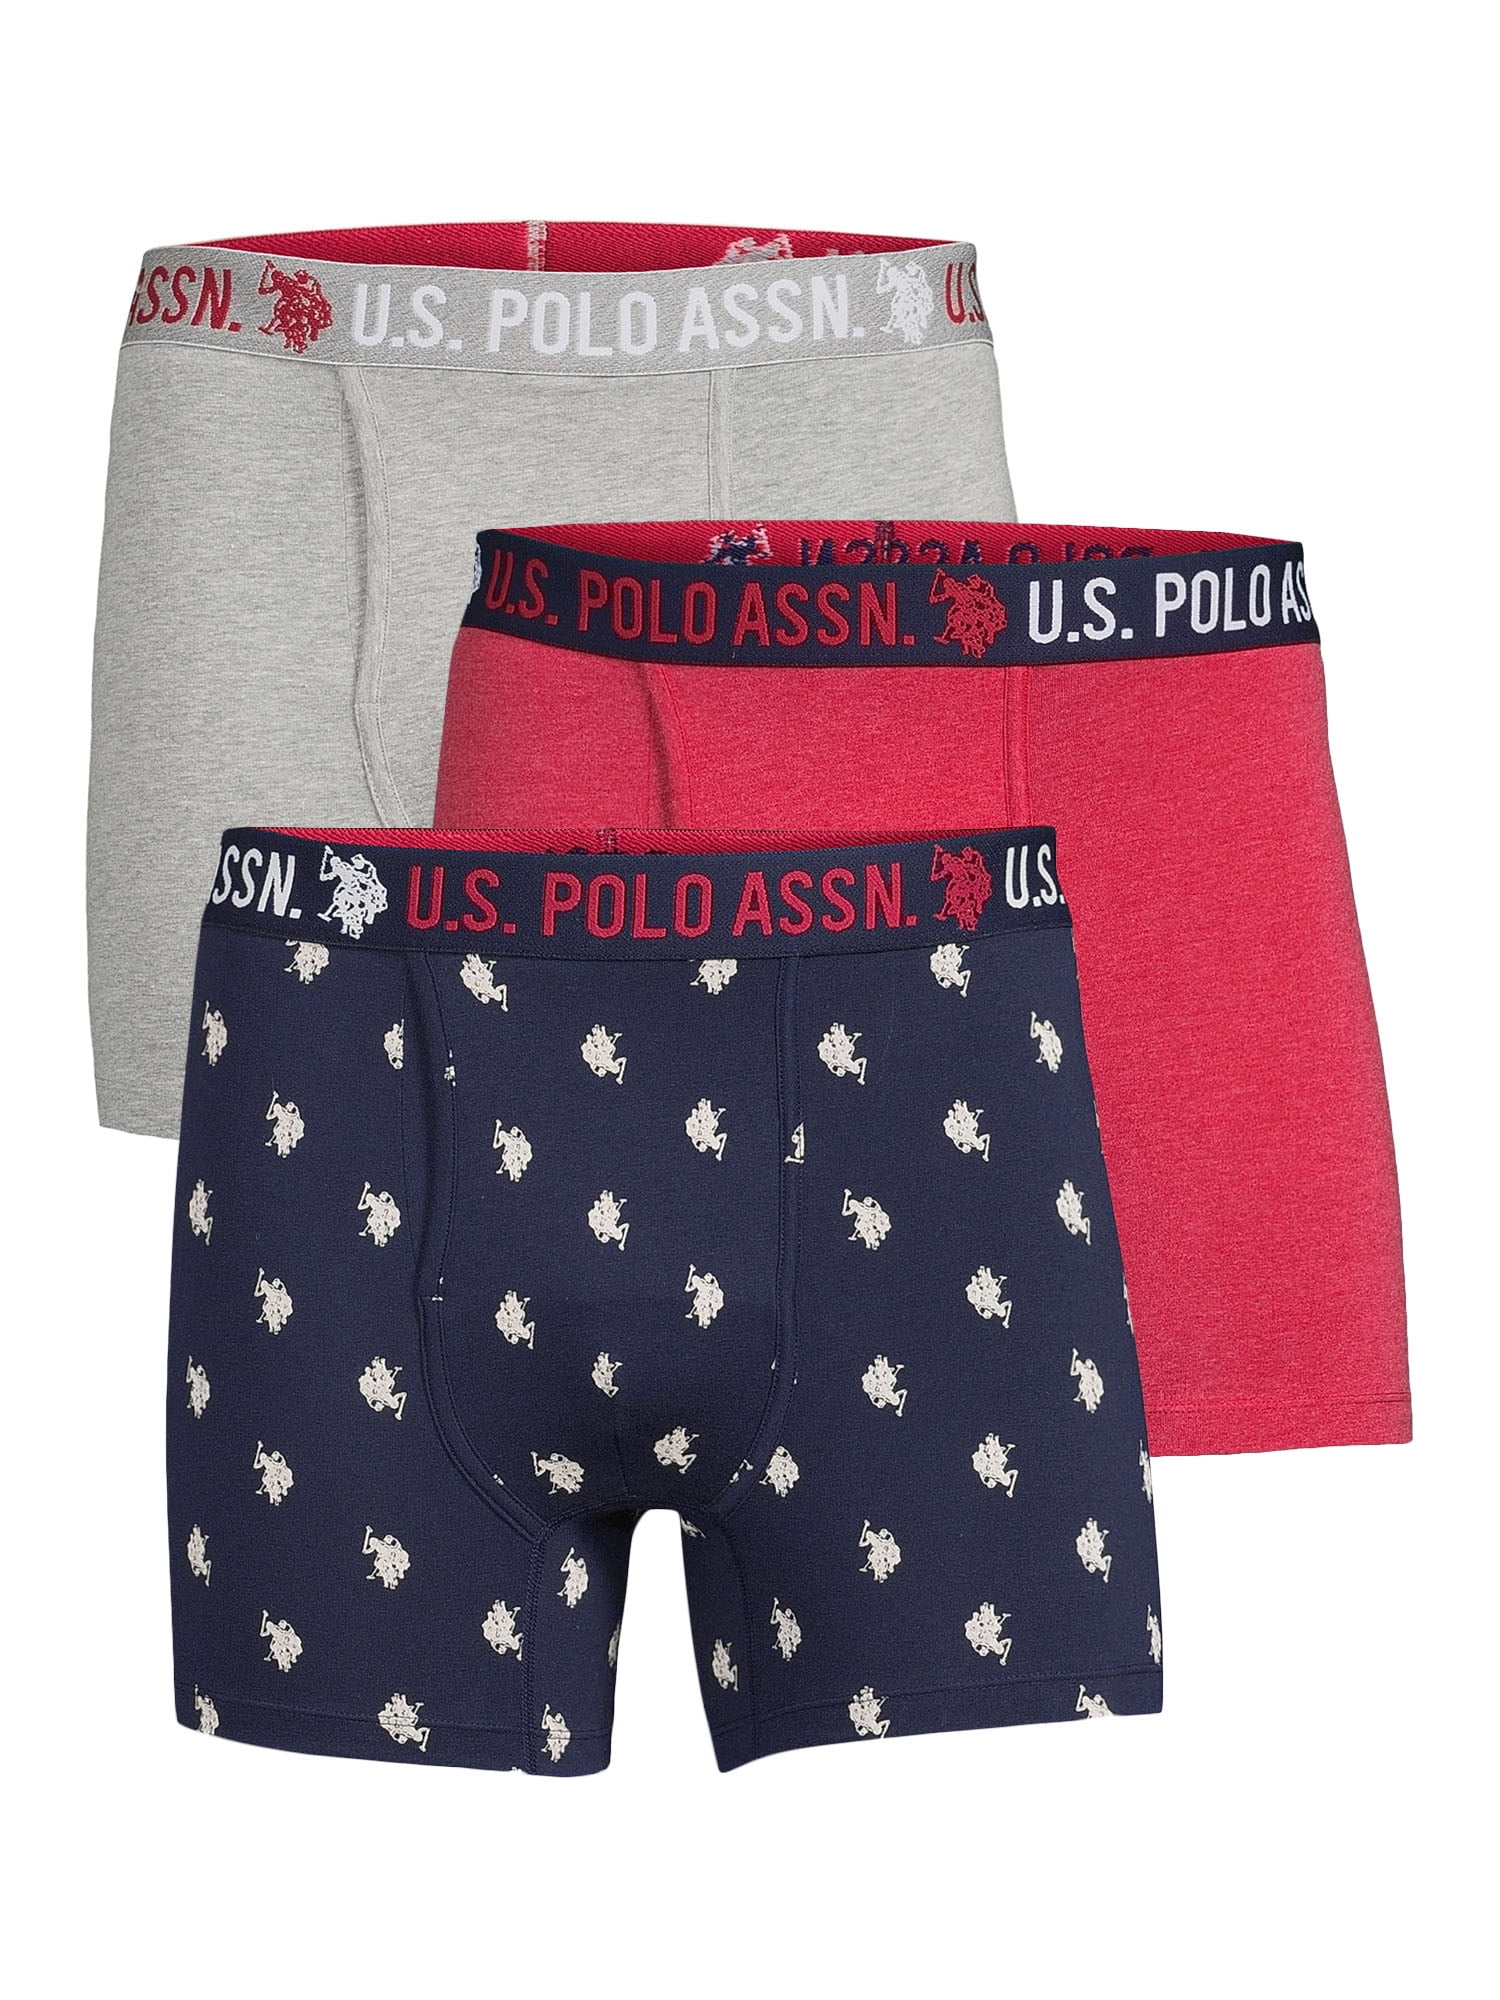 U.S. Polo Assn. Men's Underwear - 6 Pack Low Rise String Bikini